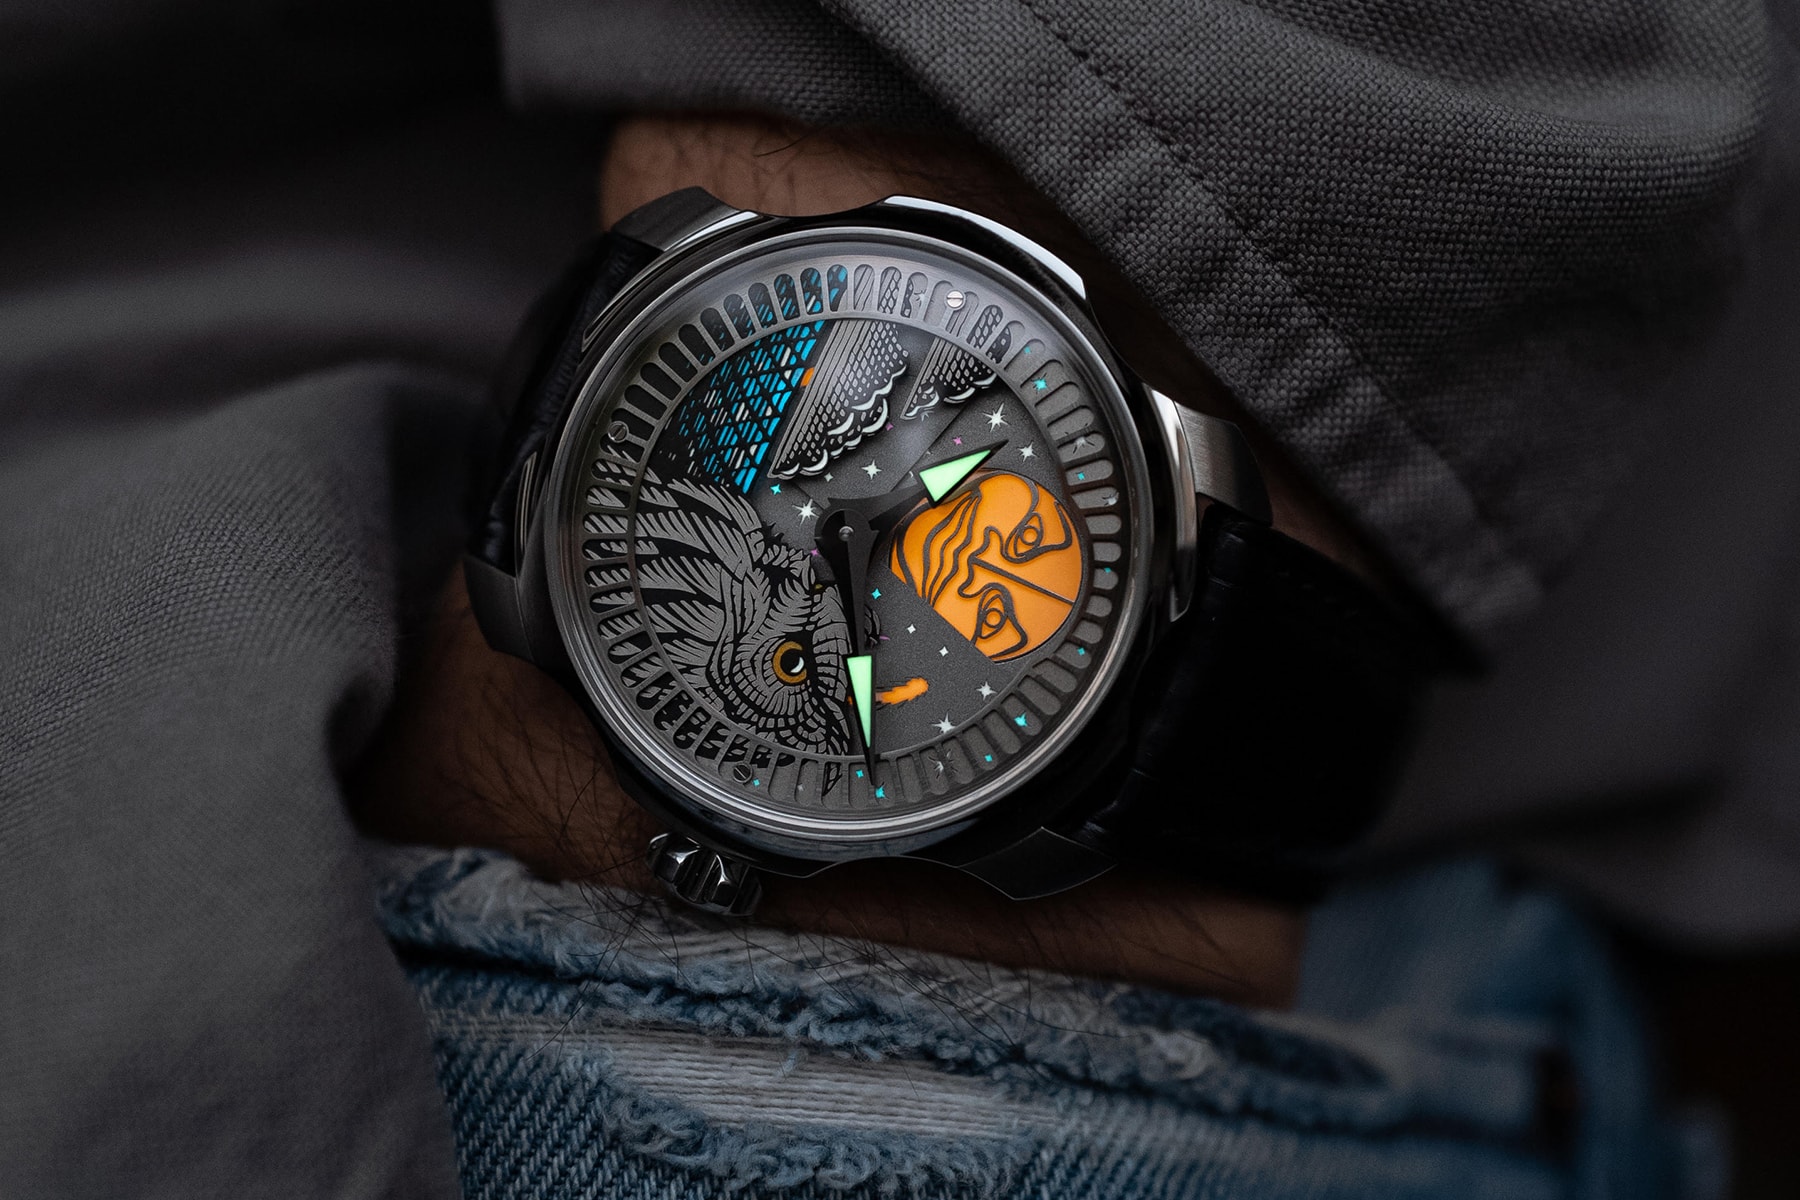 Stepan Sarpaneva Nocturne Watch Info finish Handmade Swiss automatic watches craftsmanship moonphase 